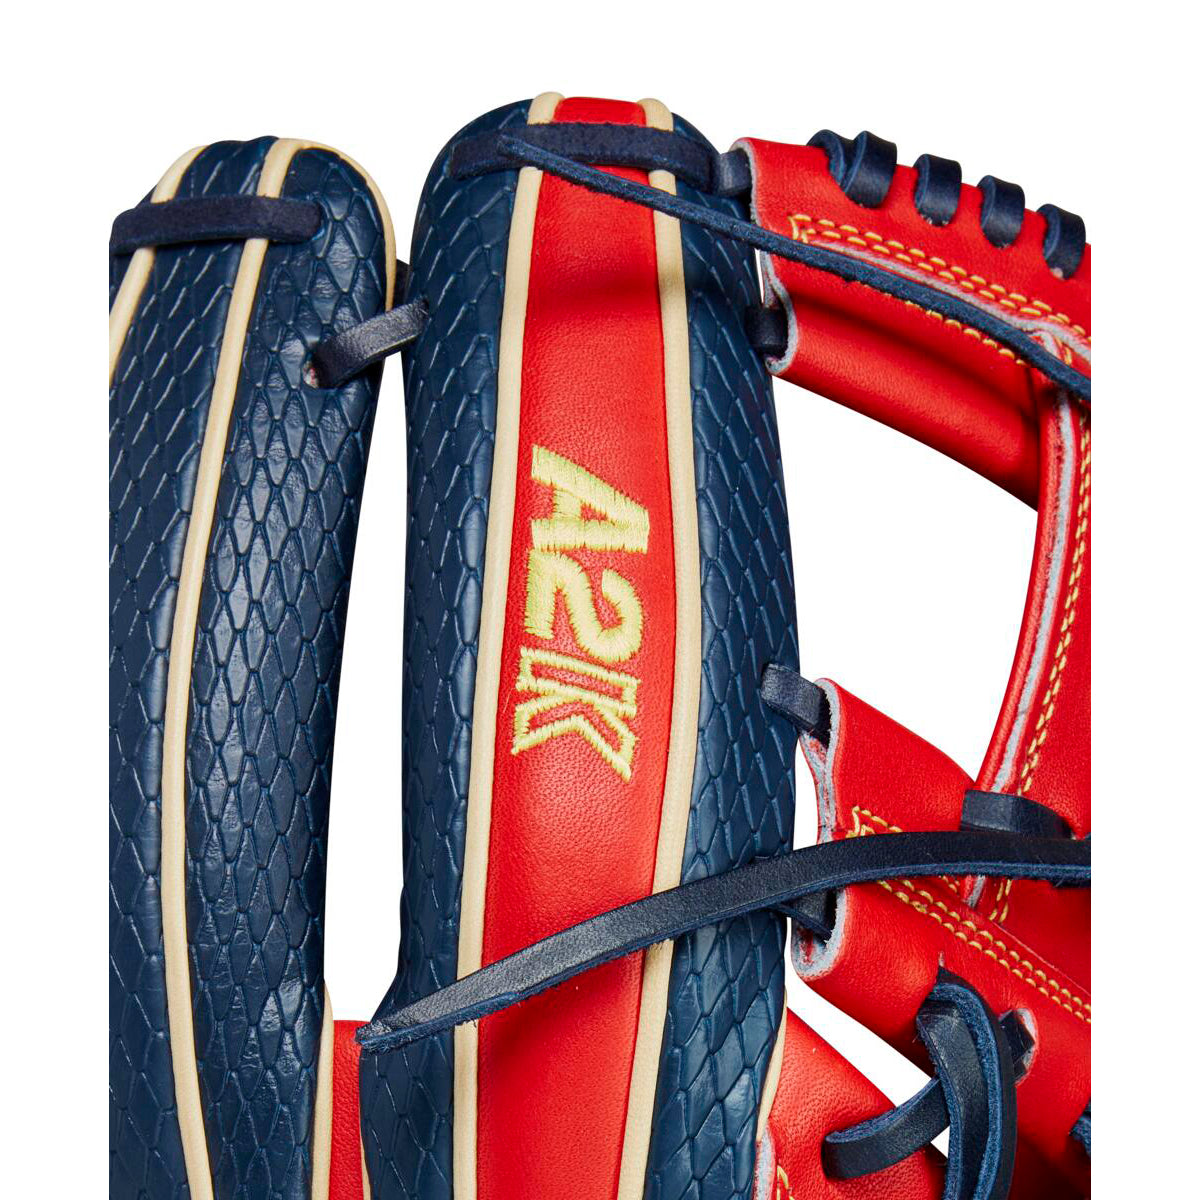 Wilson 11.5'' Ozzie Albies A2K Series Glove